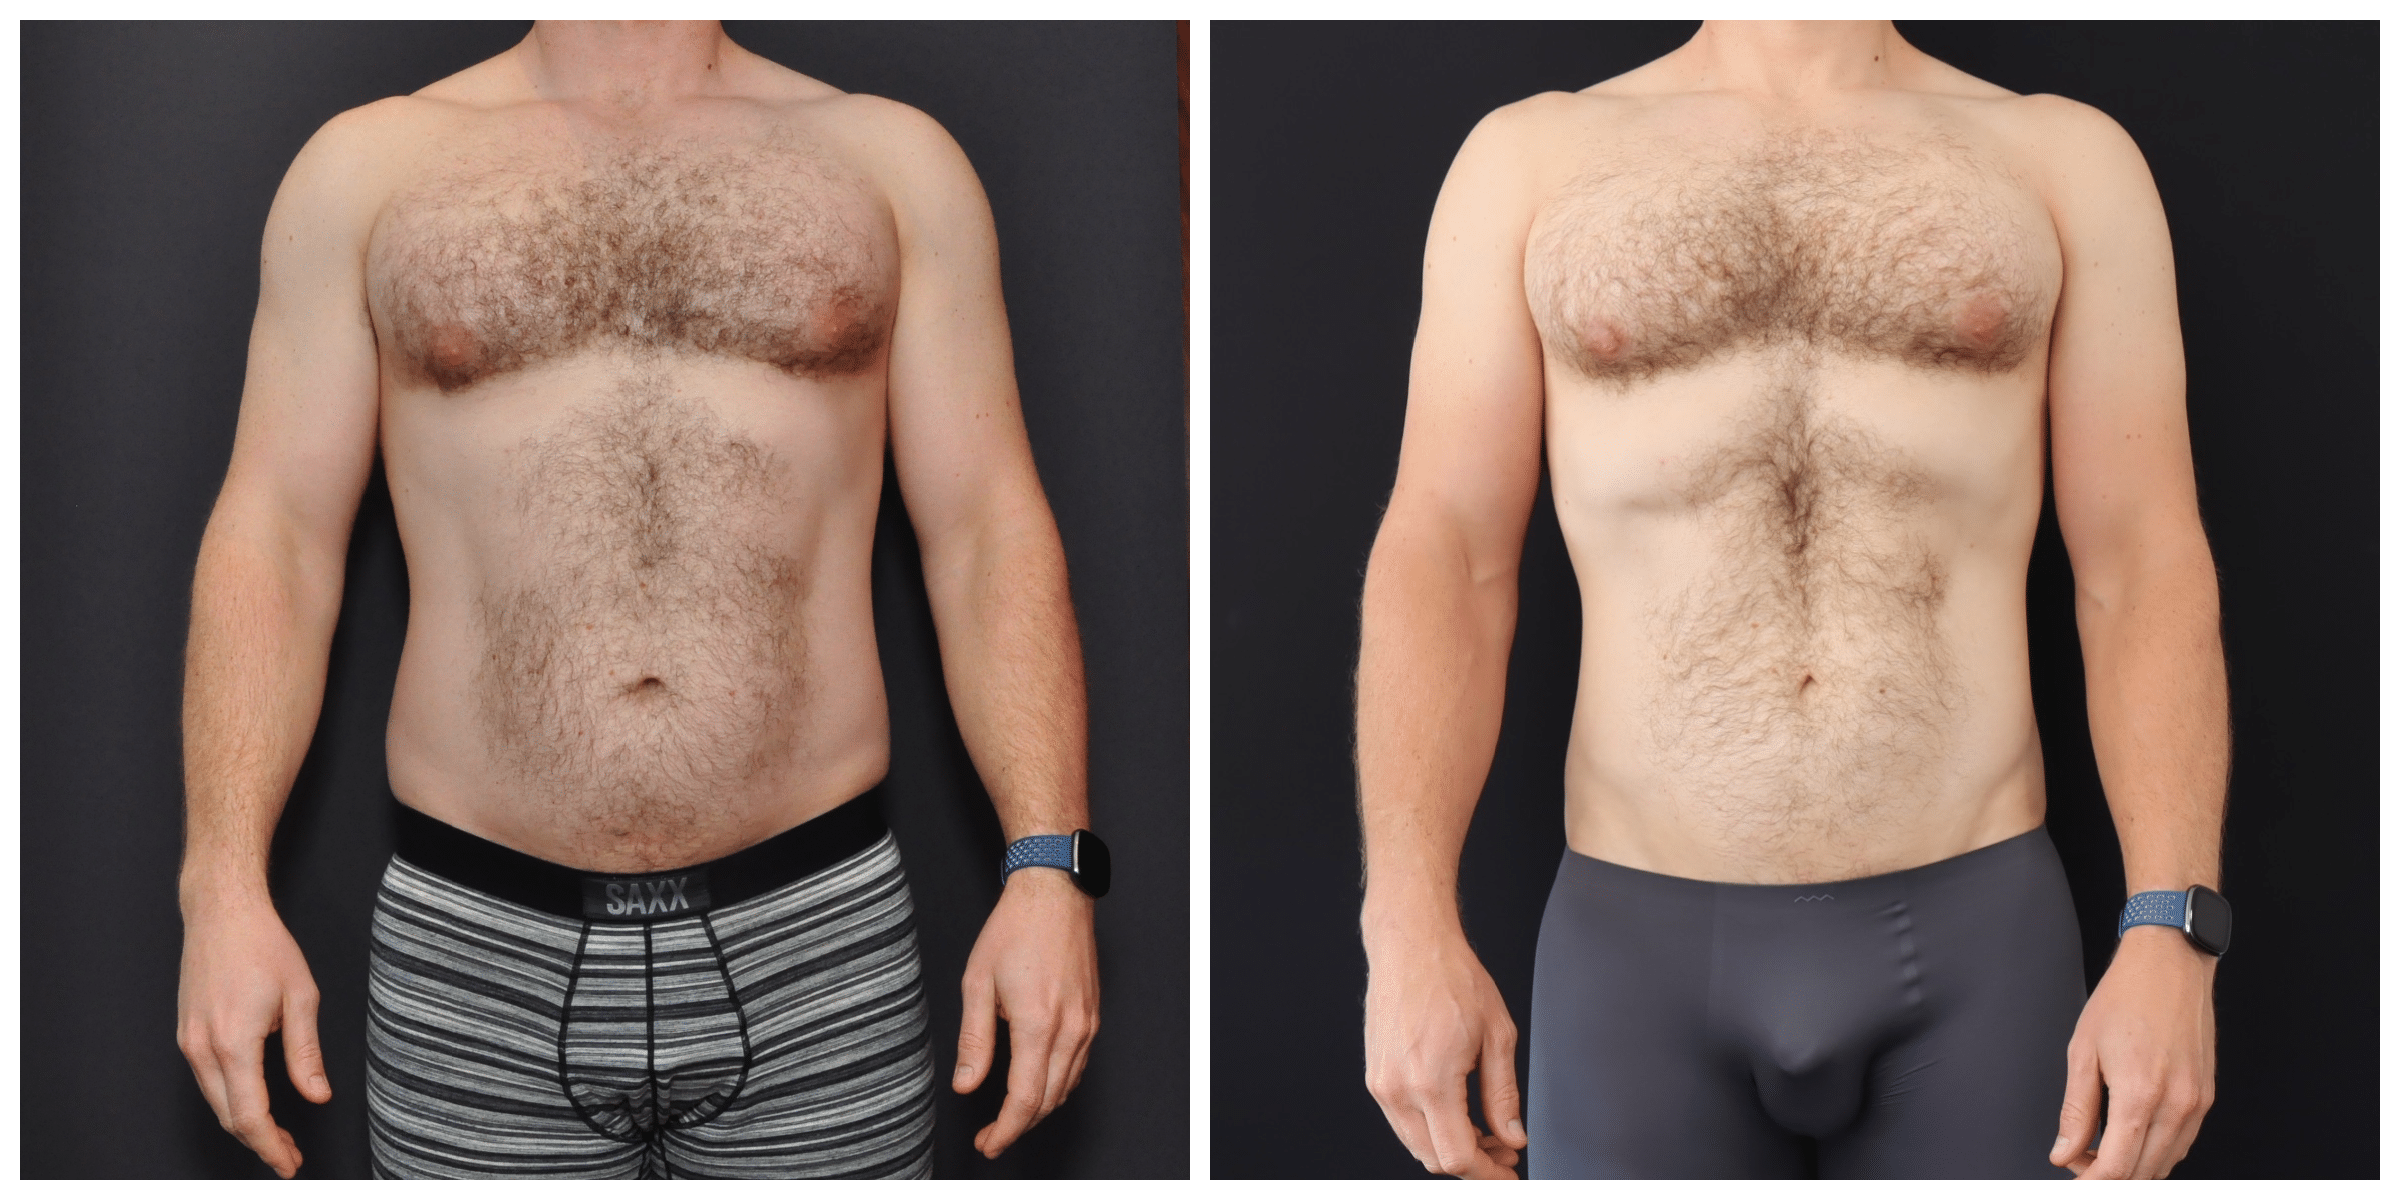 Liposuction of the abdomen and flanks, Plastic Surgeon San Francisco